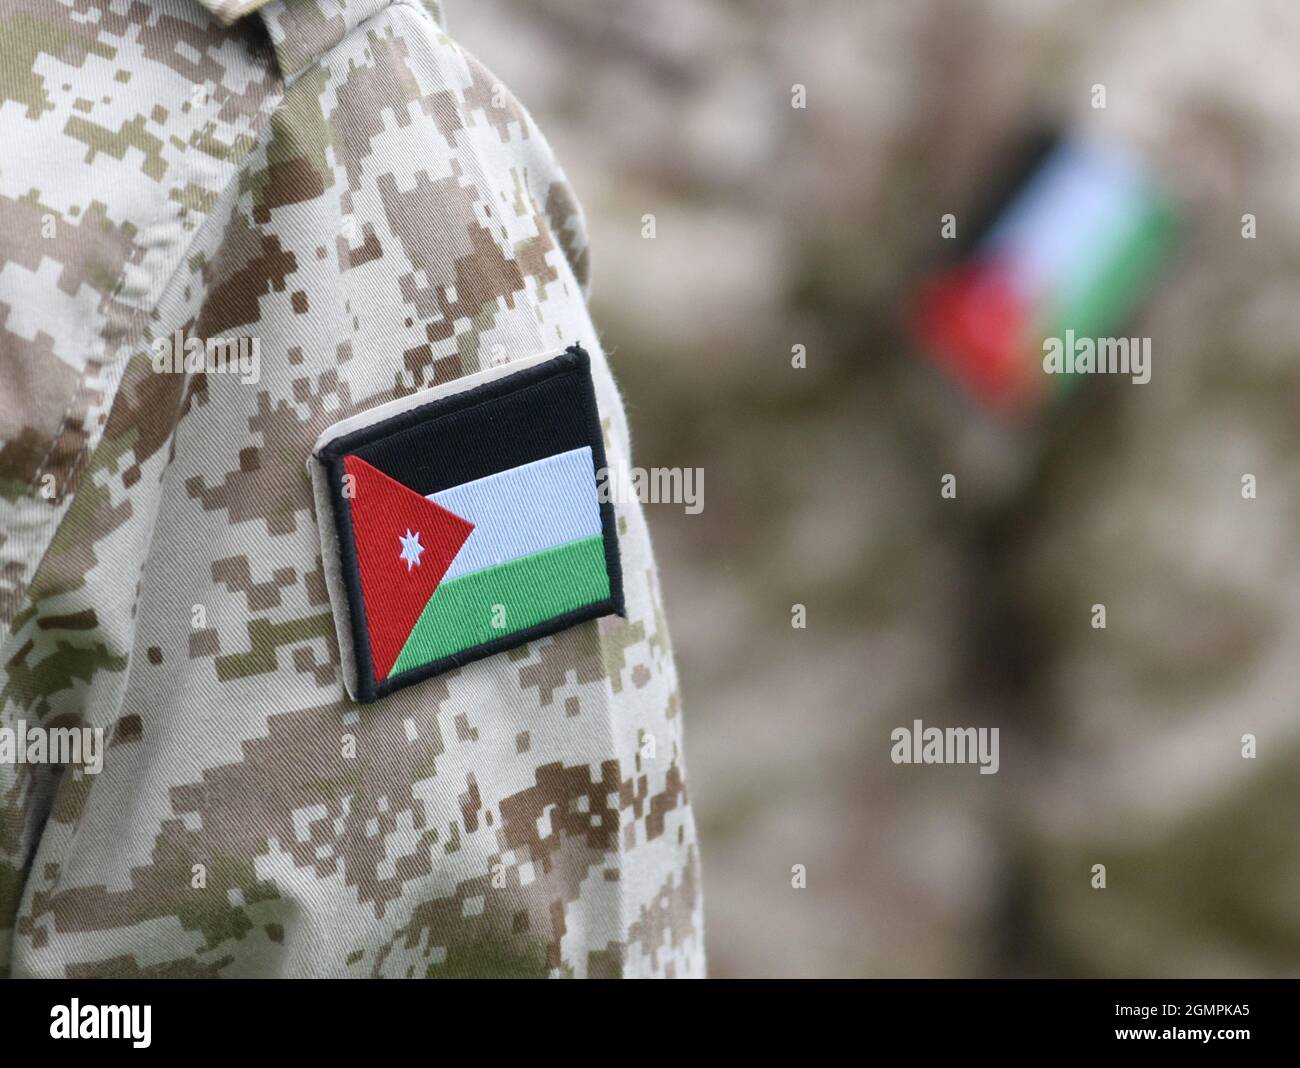 Jordanian Armed Forces (JAF). Flag of Jordan on military uniform. Stock Photo